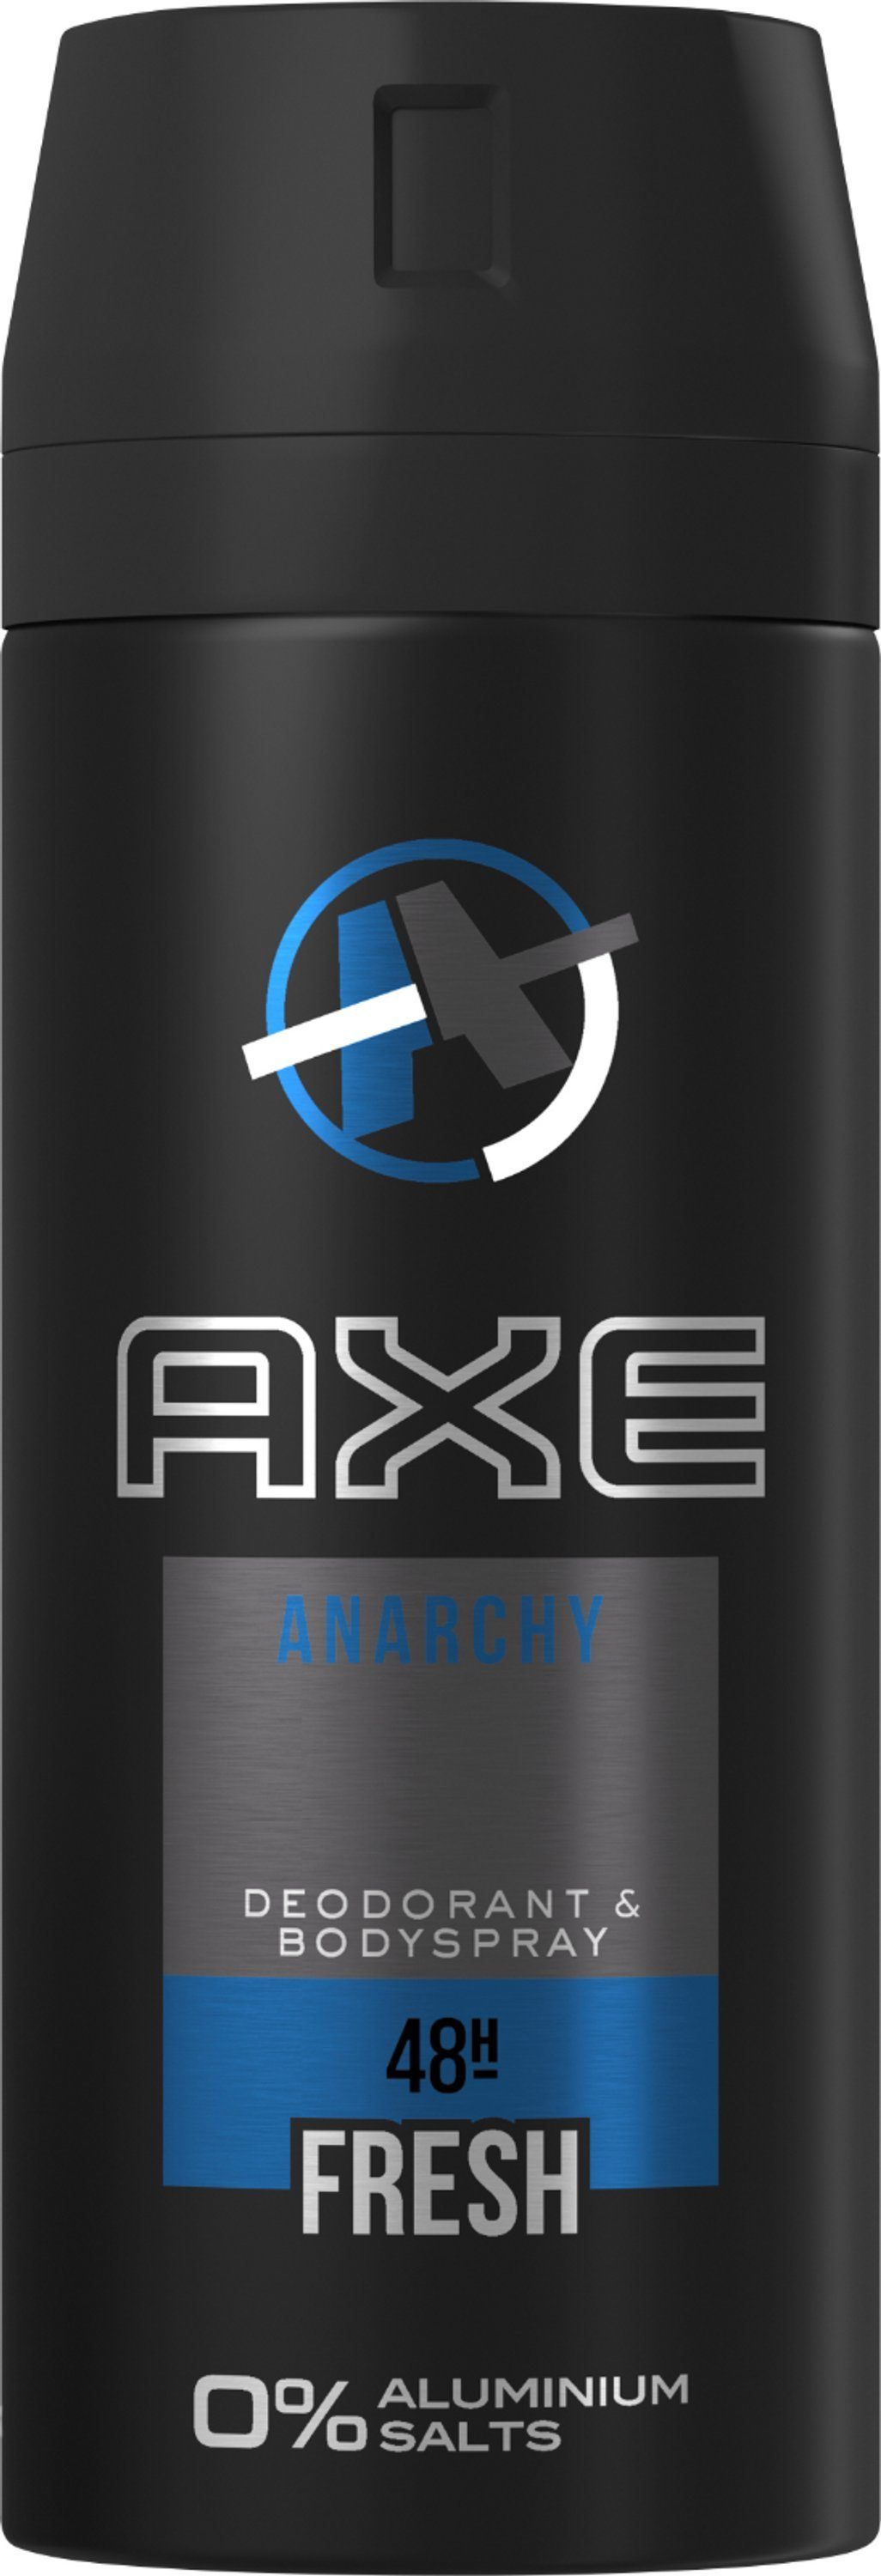 axe Deo-Set Anarchy for Him 12x Deodorant ohne Aluminiumsalze Bodyspray Deo 150ml